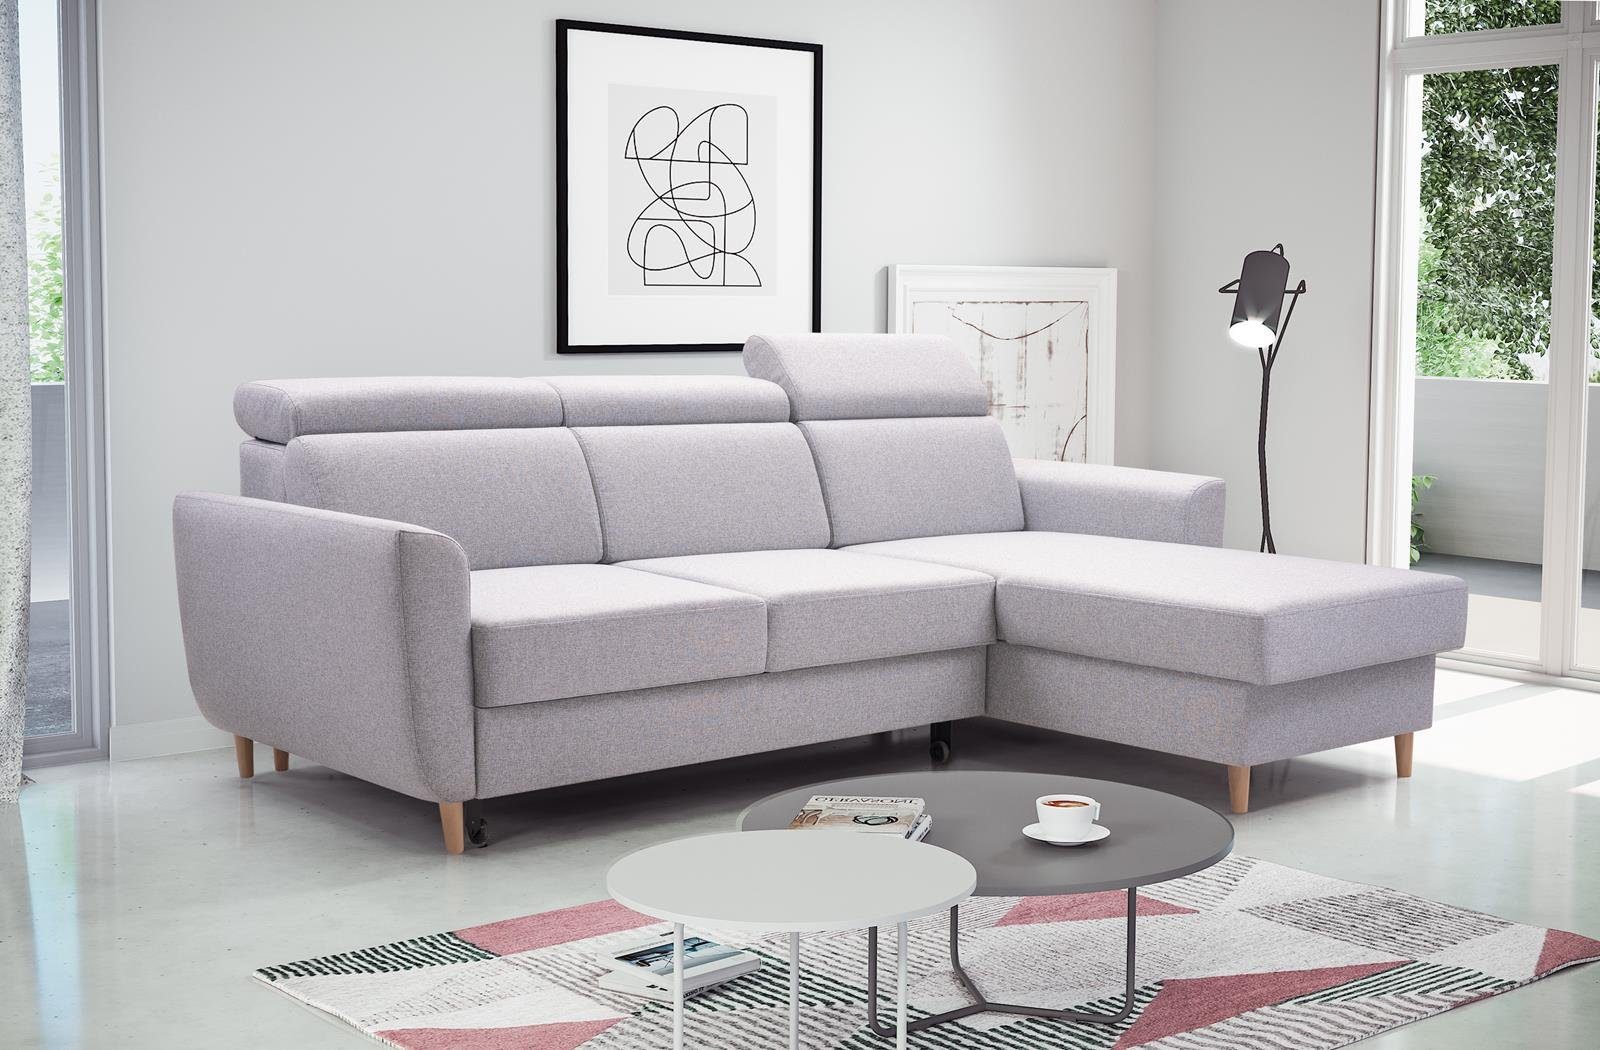 Beautysofa Ecksofa Modern Ecksofa GUSTAW Sofa Couch mit Schlaffunktion universelle grau